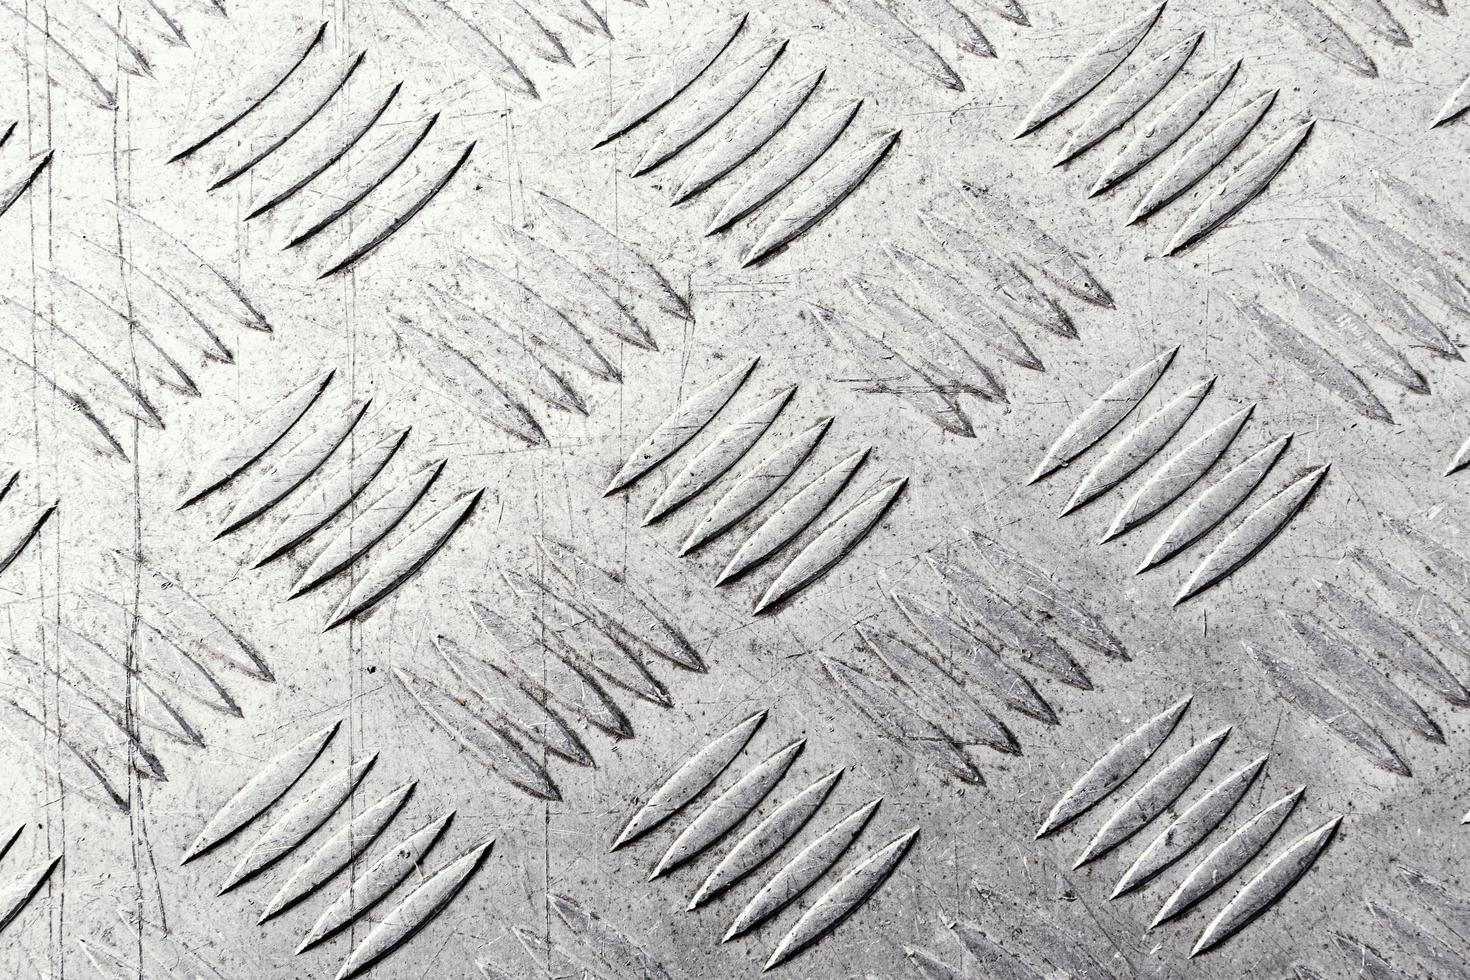 Rough metallic surface texture background photo